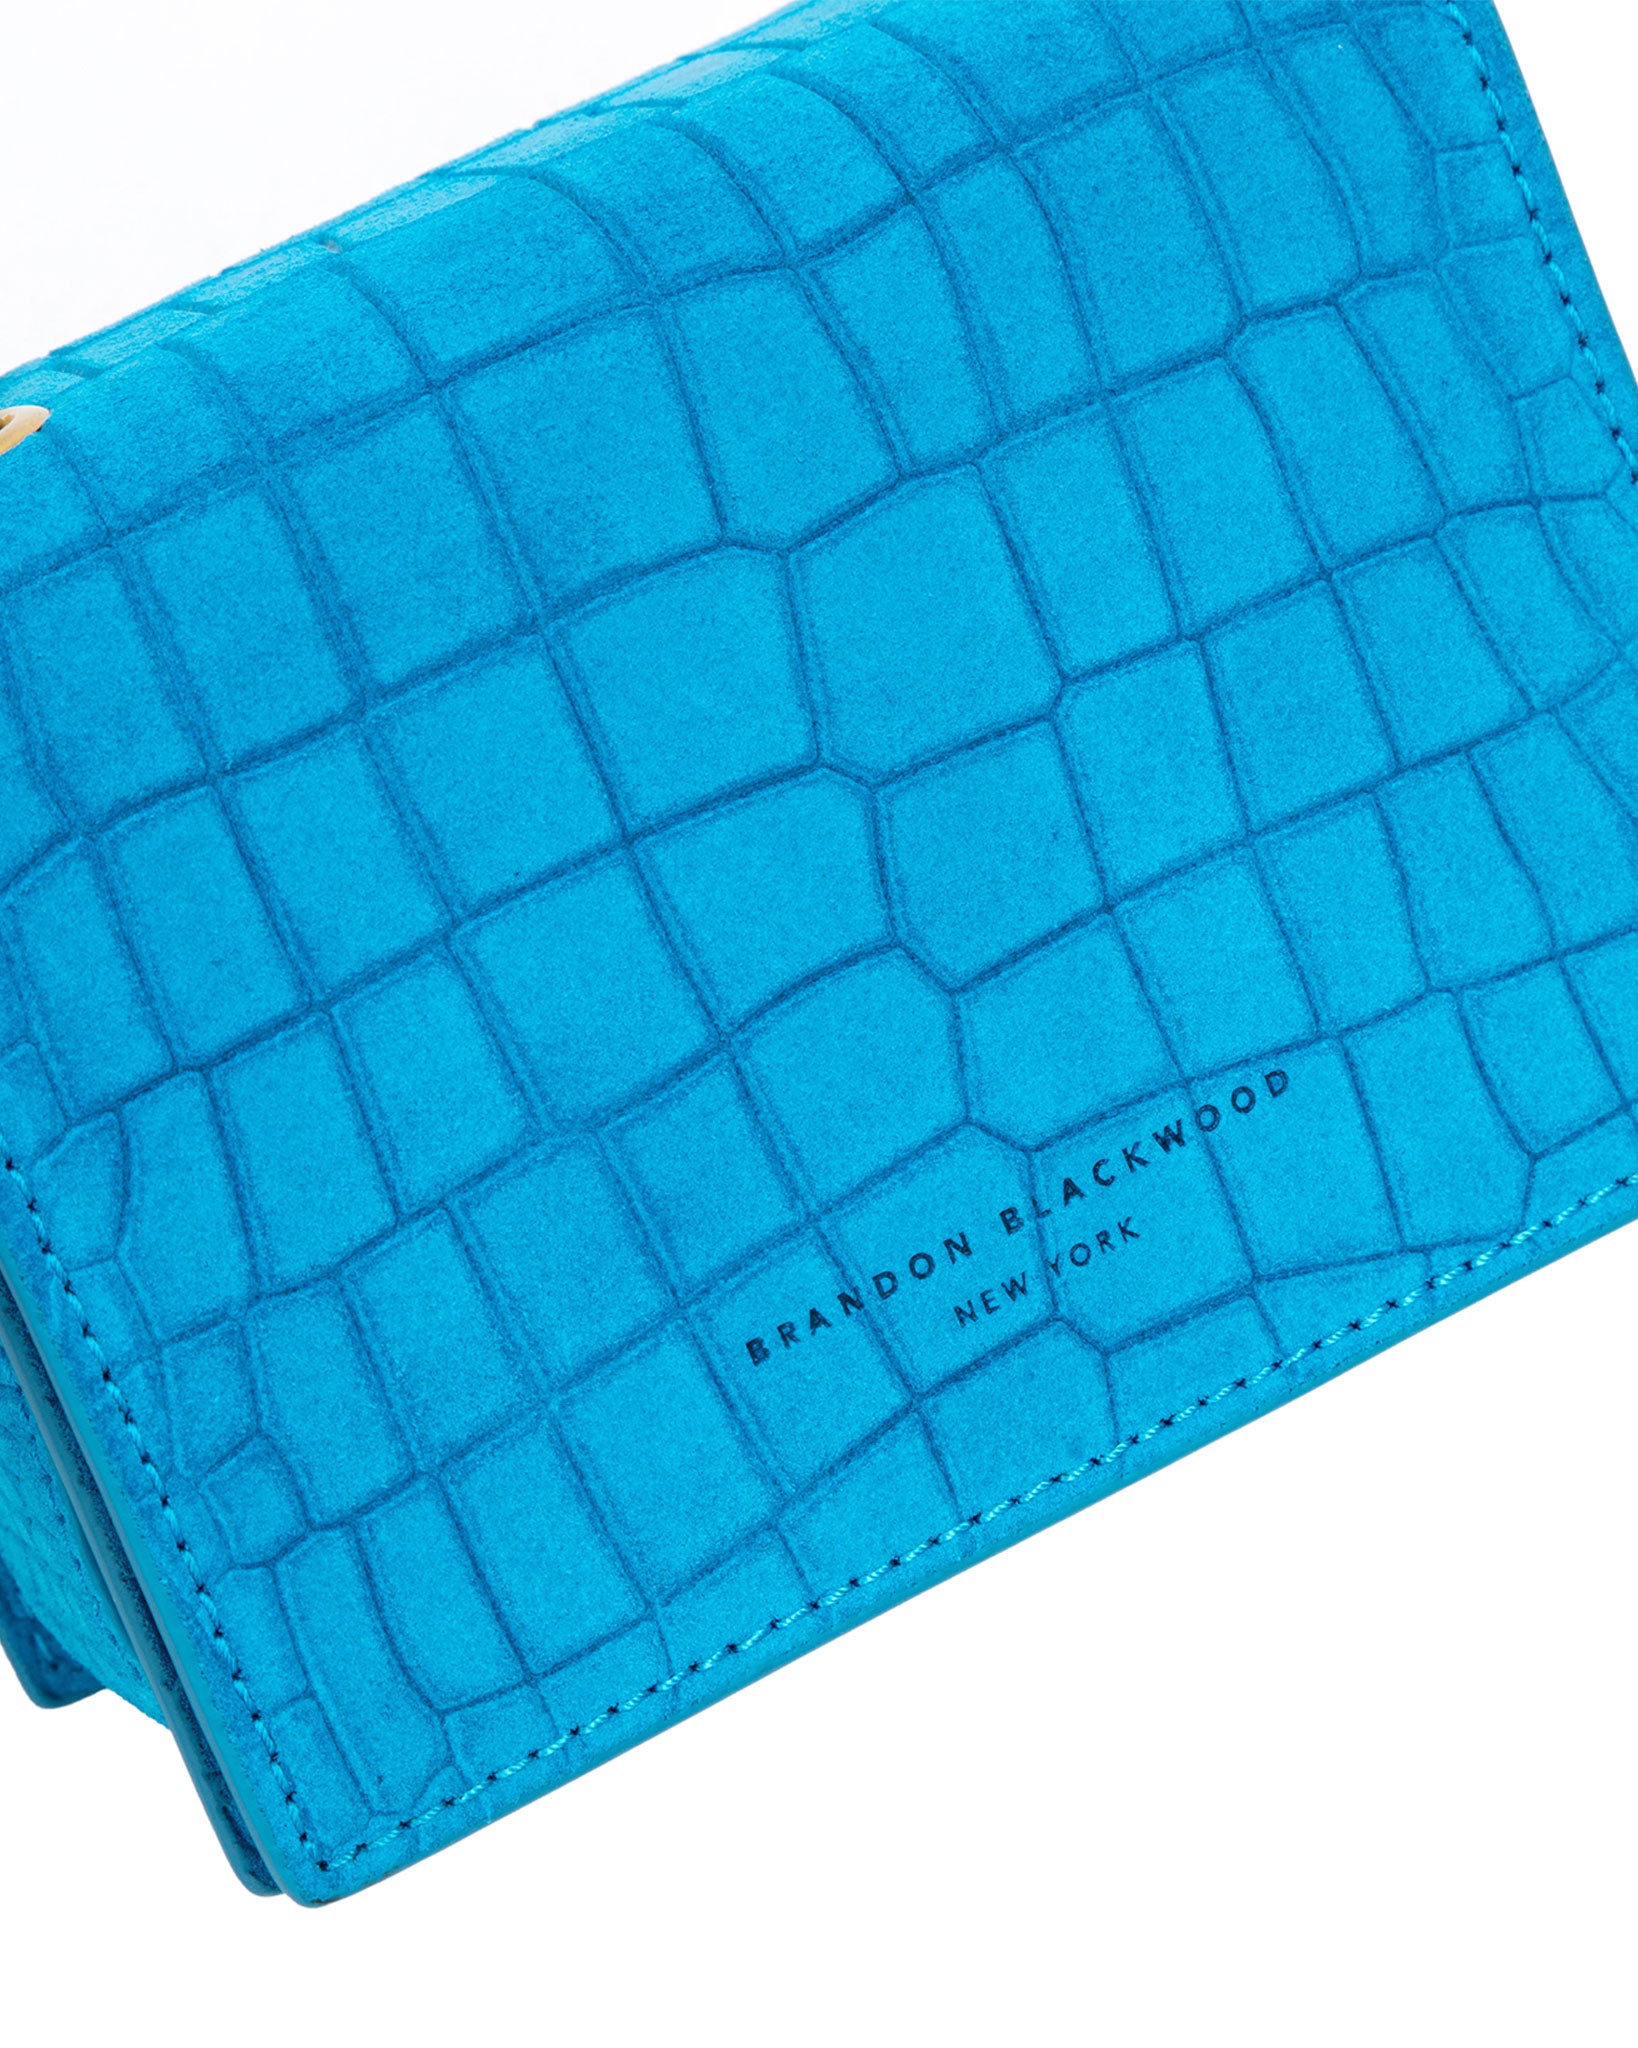 Brandon Blackwood New York - Mini Sophia Bag - Aqua Blue Croc Embossed w/ Gold Hardware